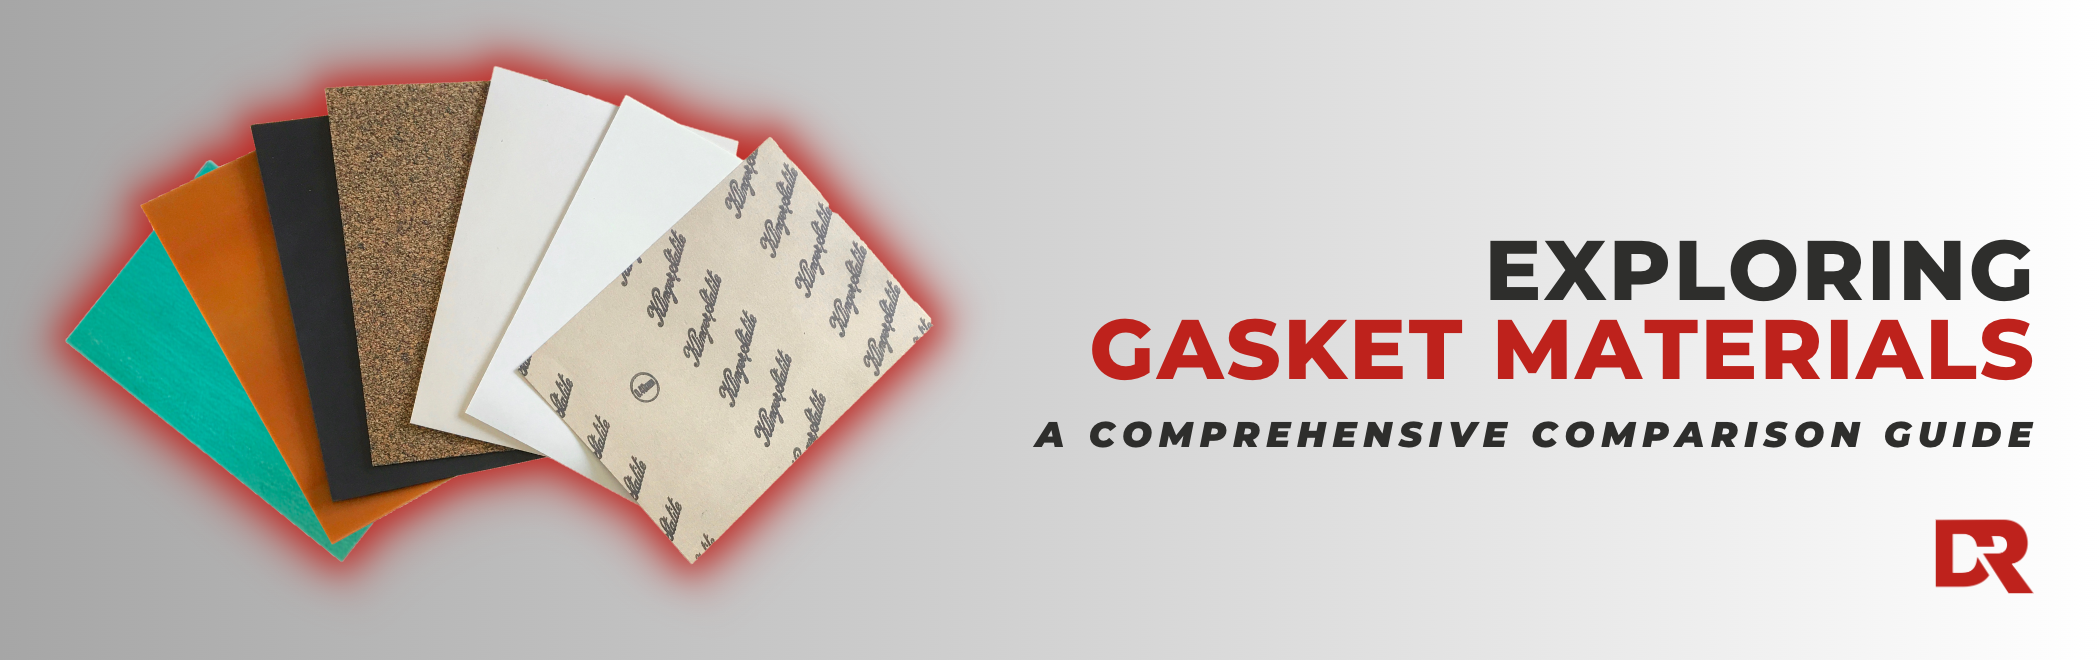 Exploring Gasket Materials: A Comprehensive Comparison Guide